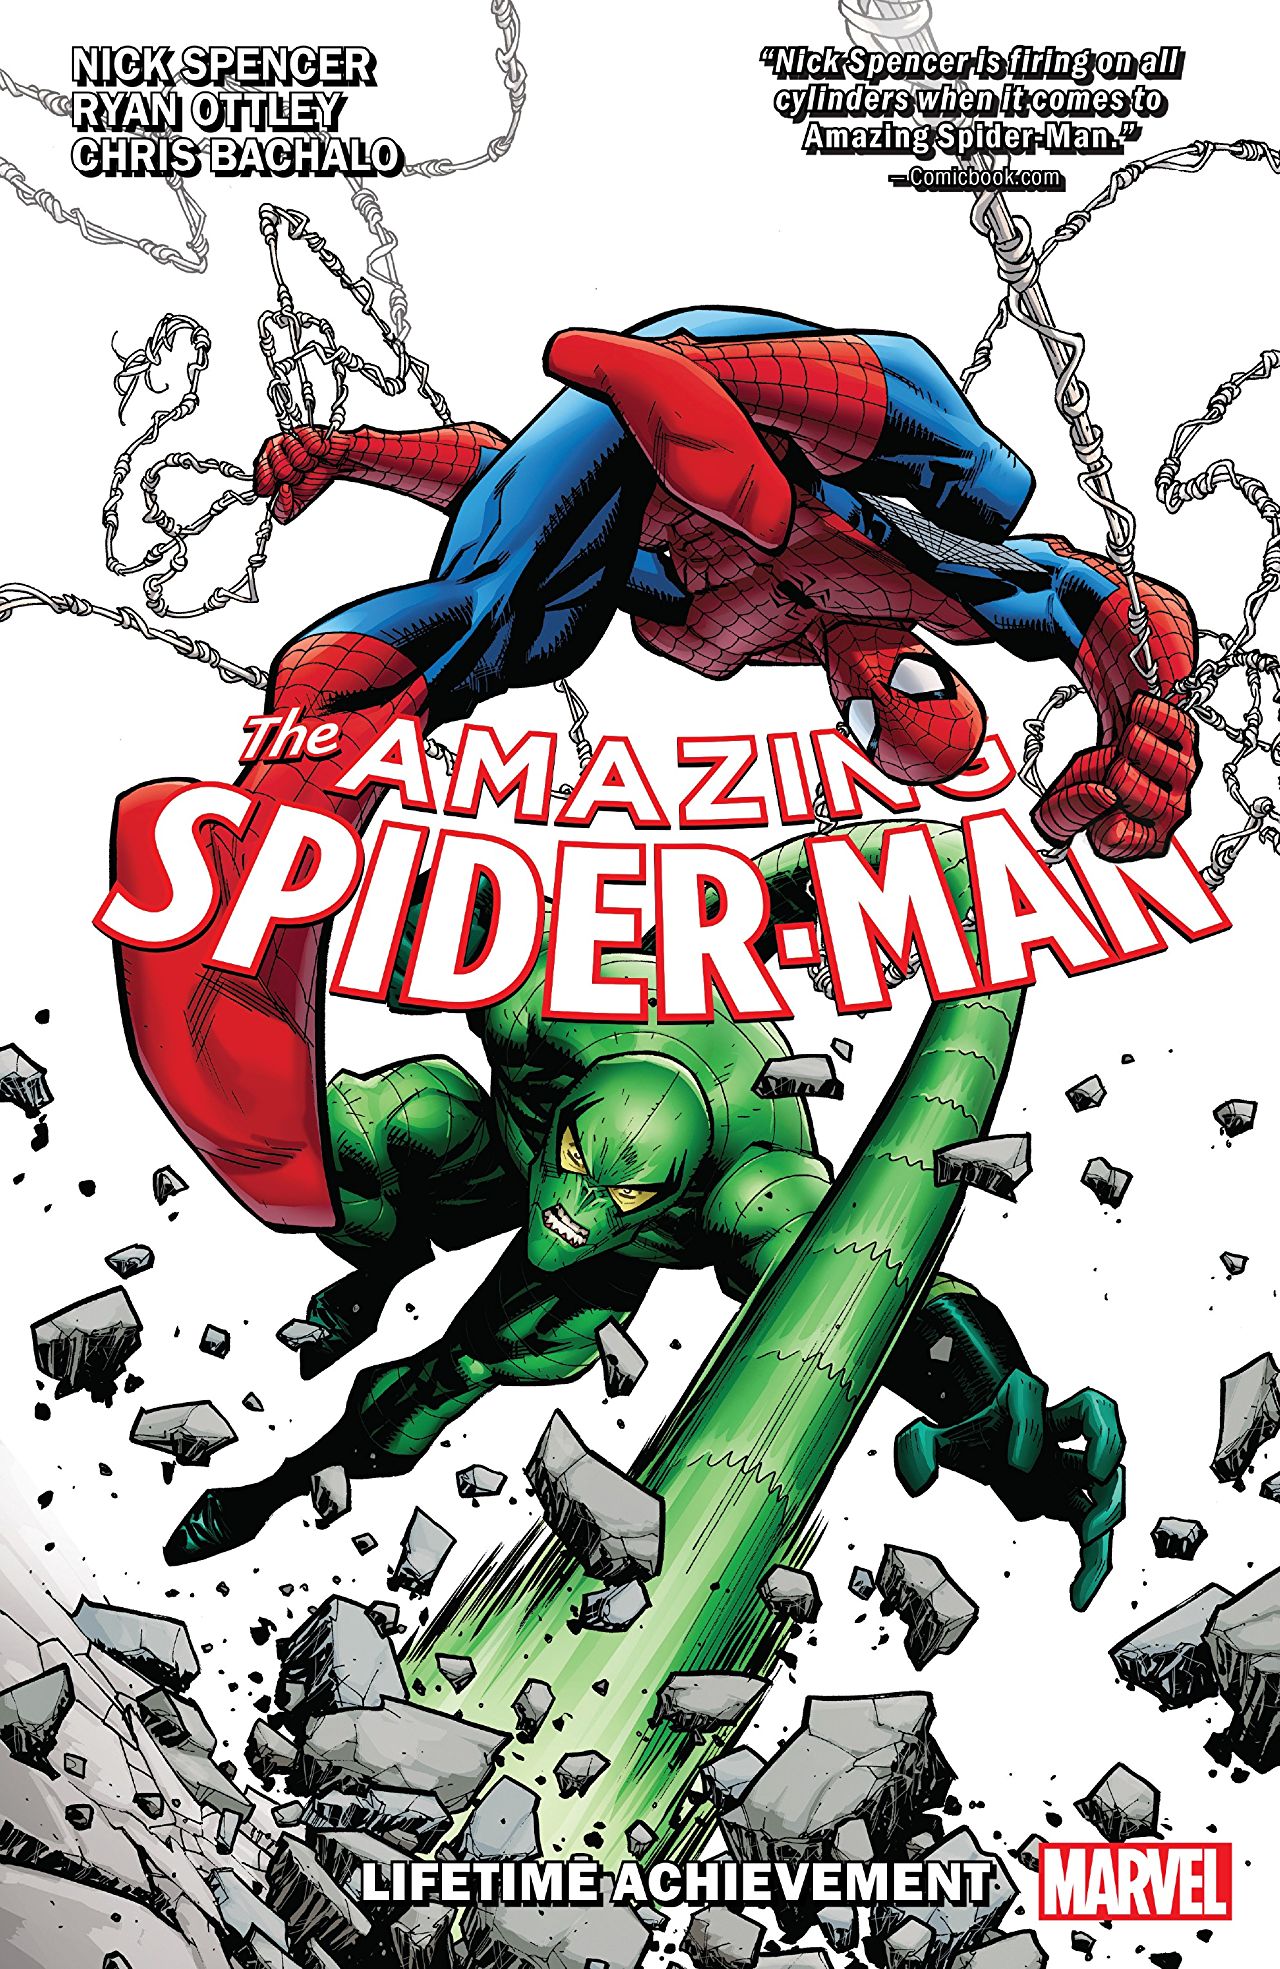 Amazing Spider-Man by Nick Spencer Vol. 3: Lifetime Achievement (Trade Paperback)